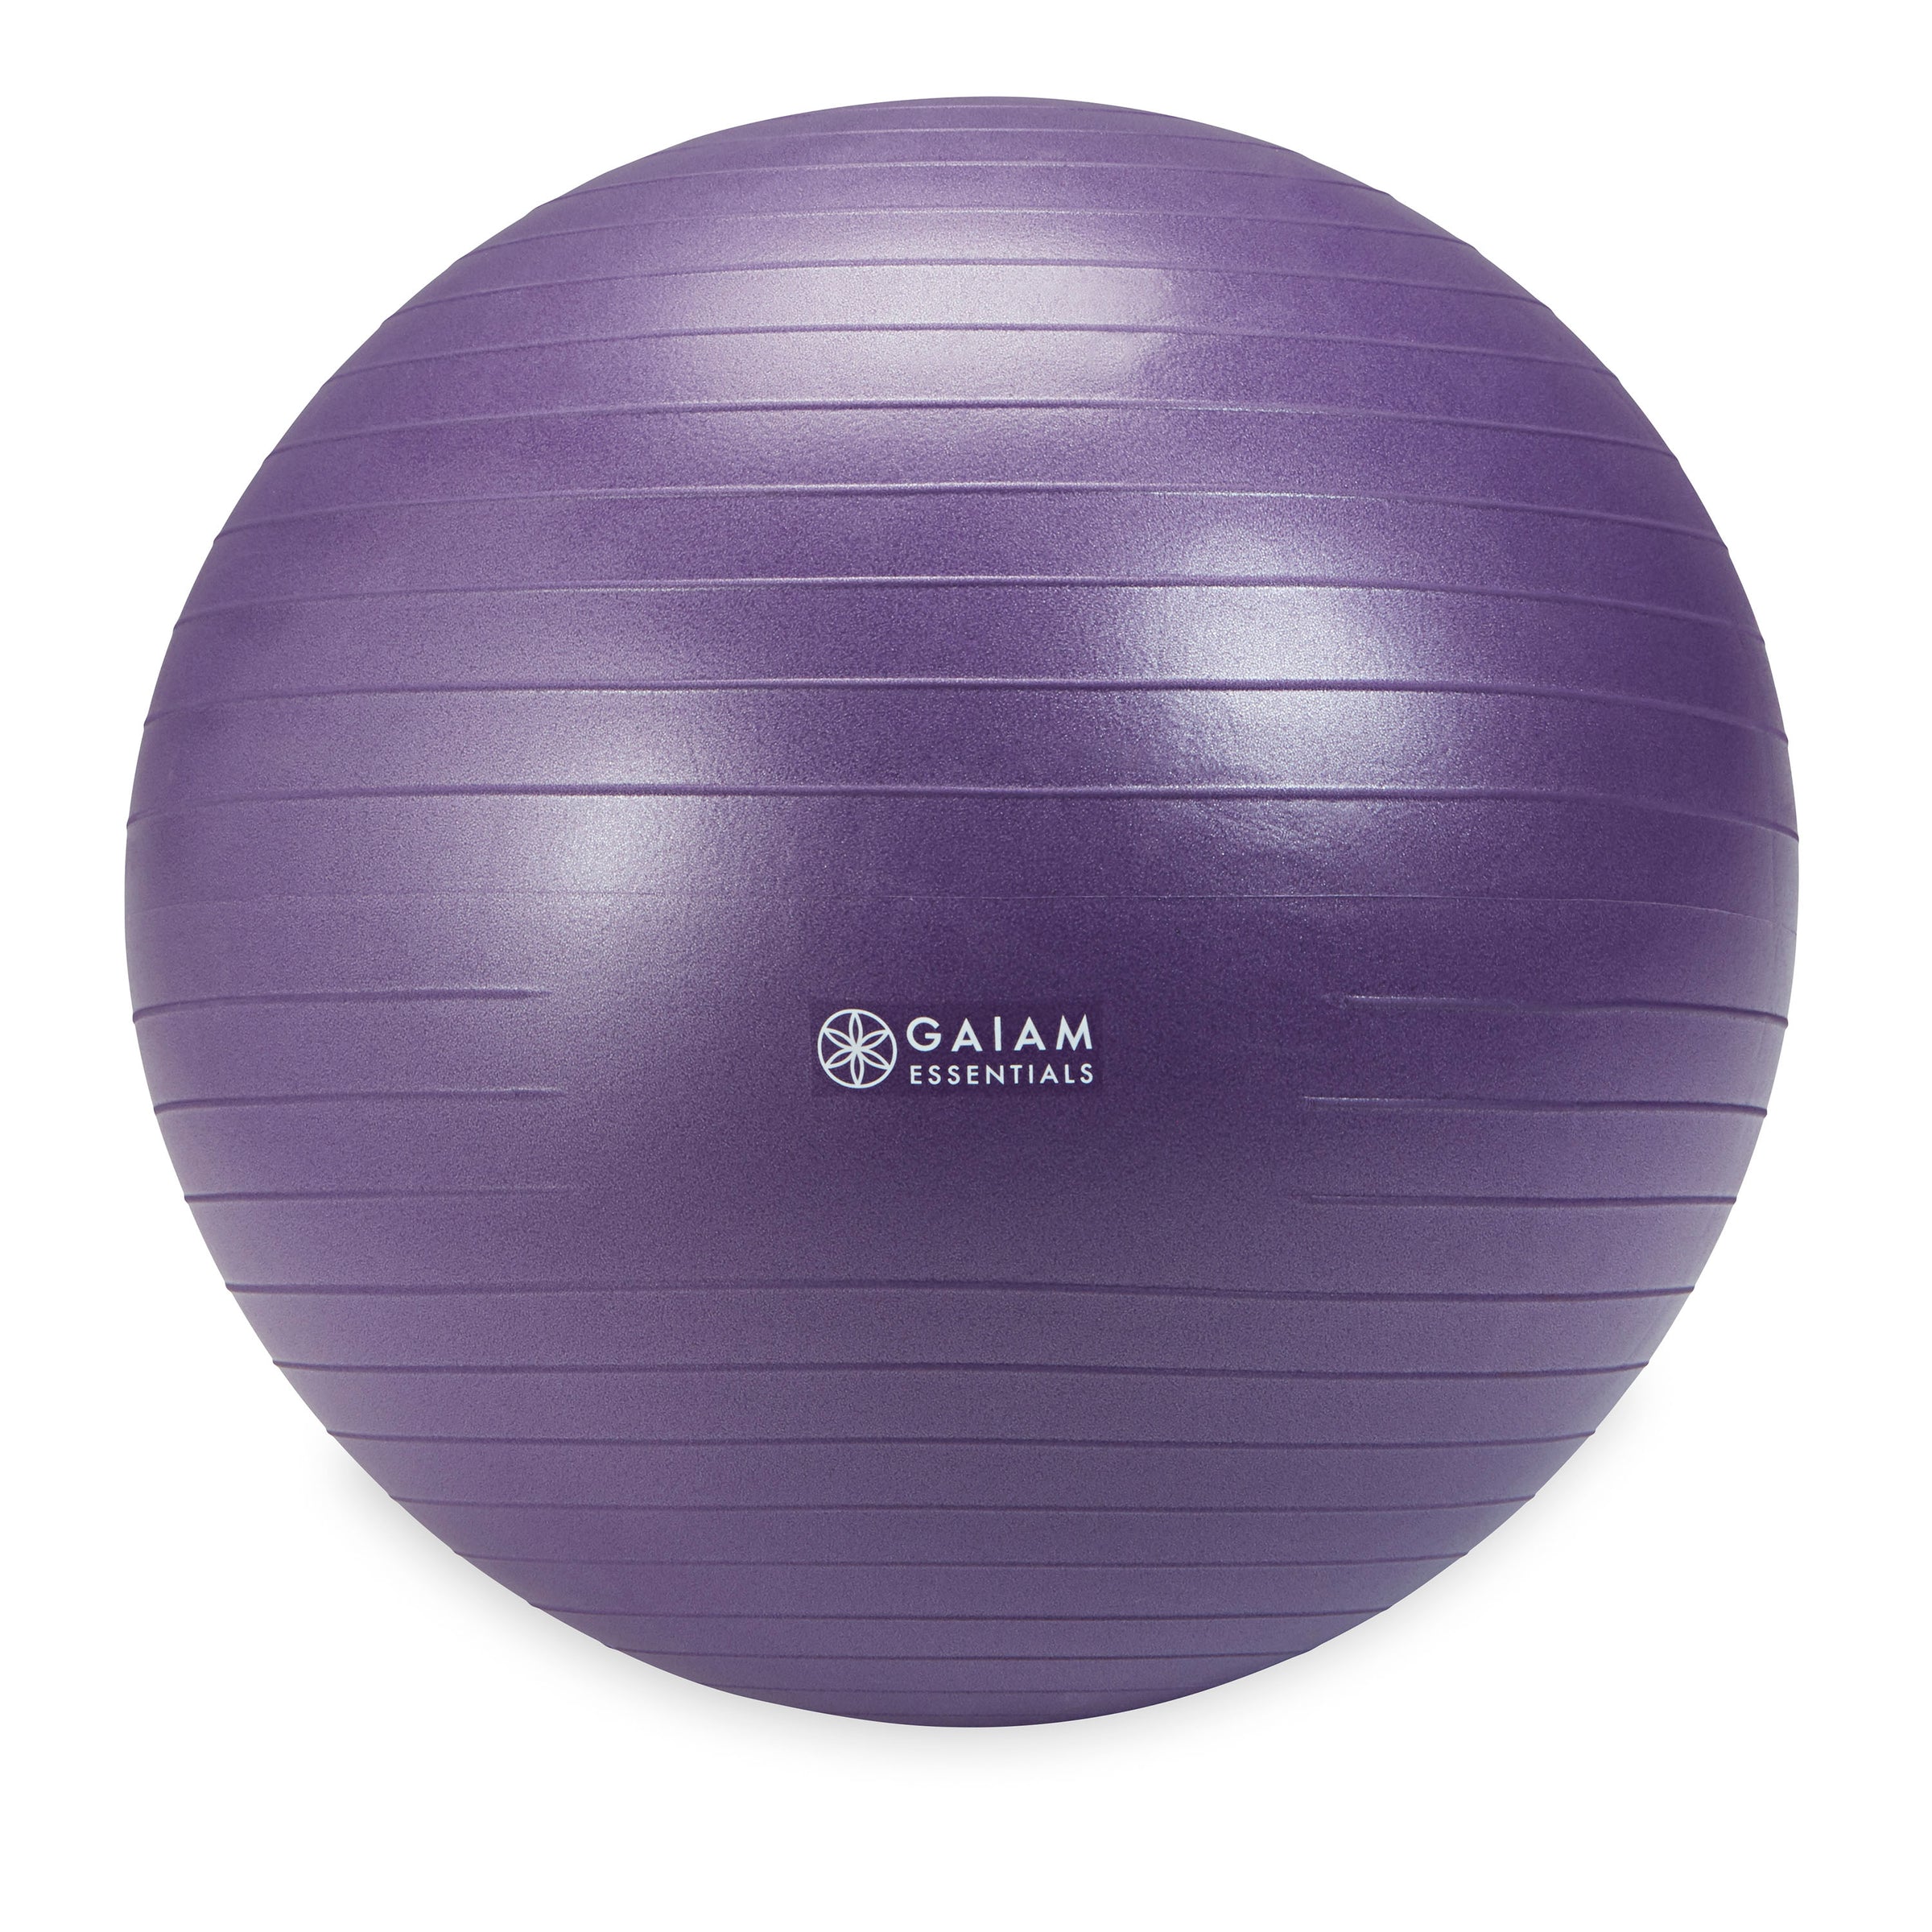 Gaiam Essentials Balance Ball with Base